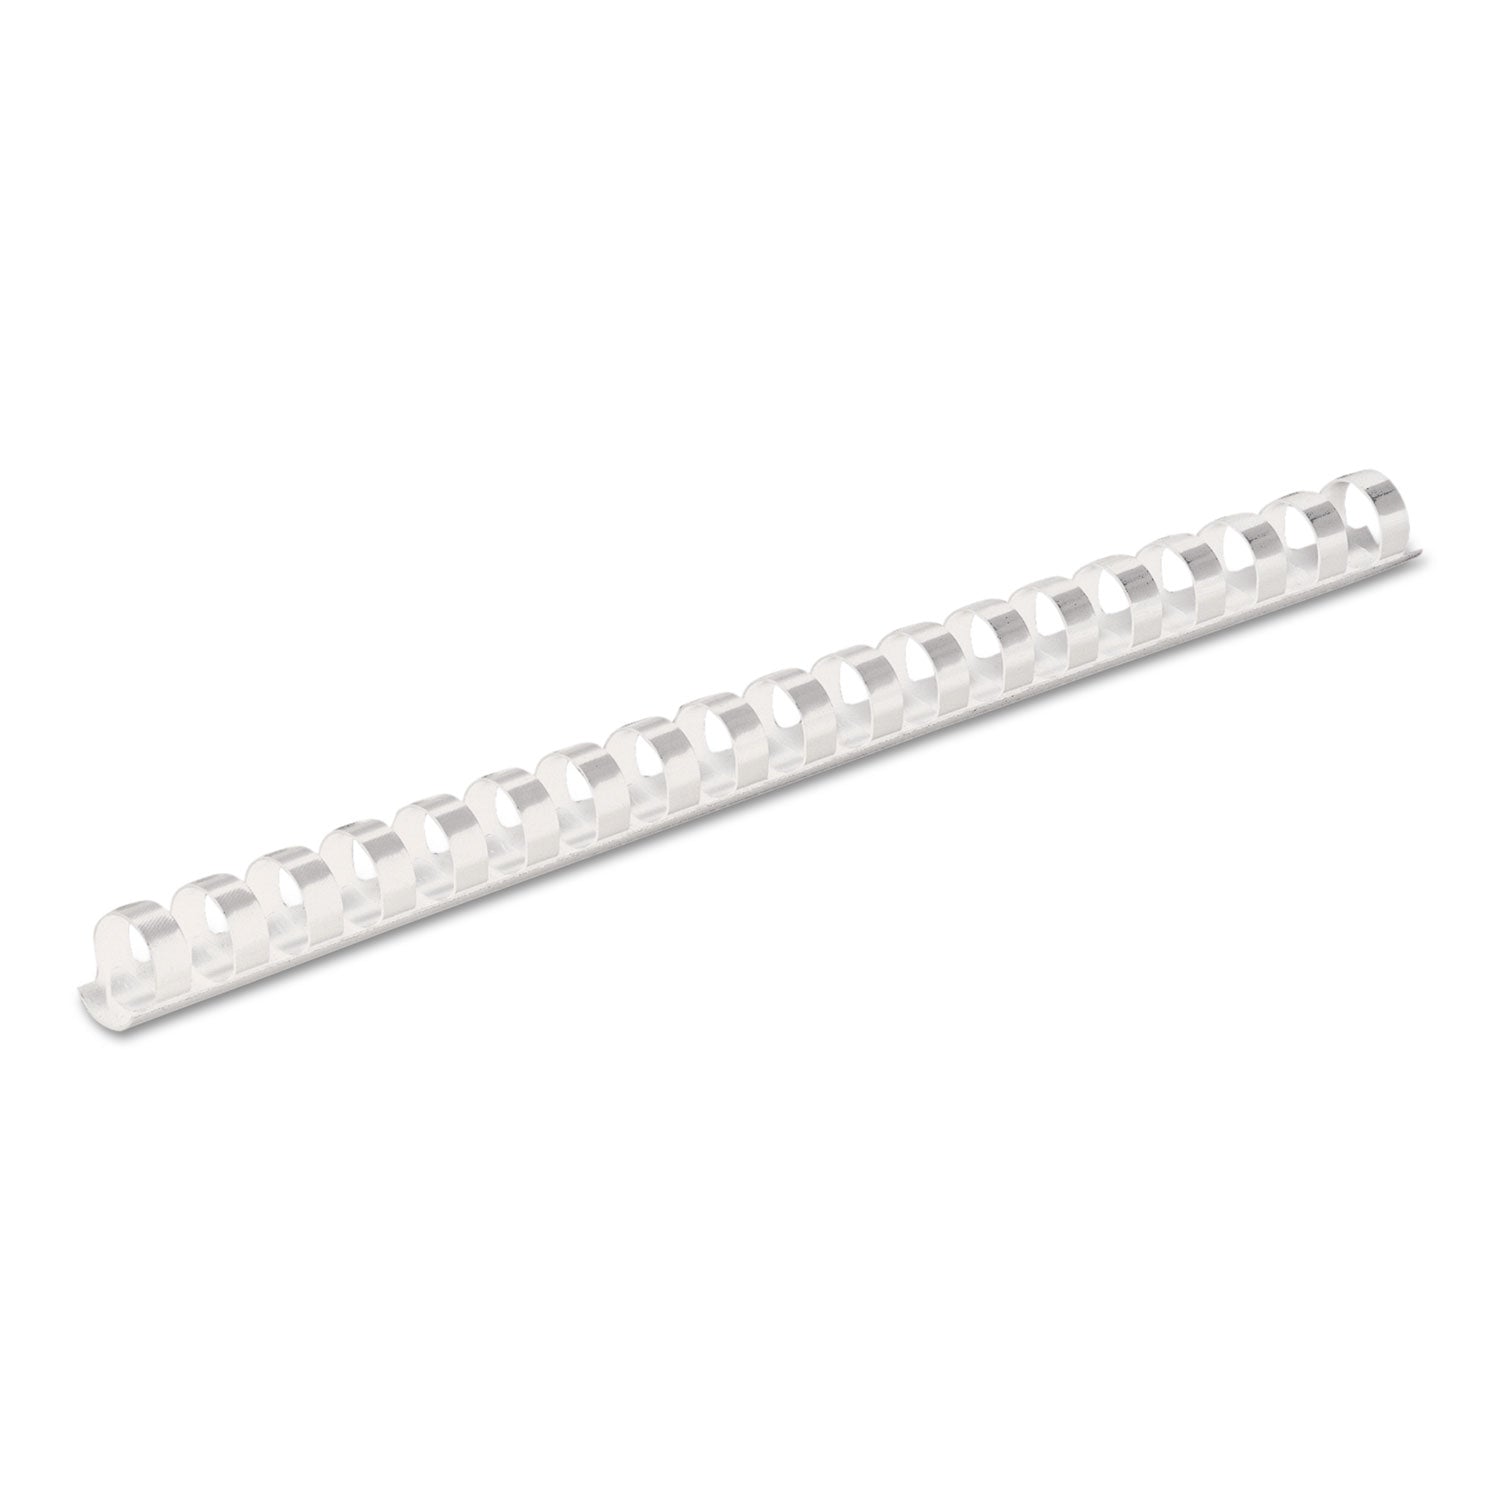 Plastic Comb Bindings, 3/8" Diameter, 55 Sheet Capacity, White, 100/Pack - 